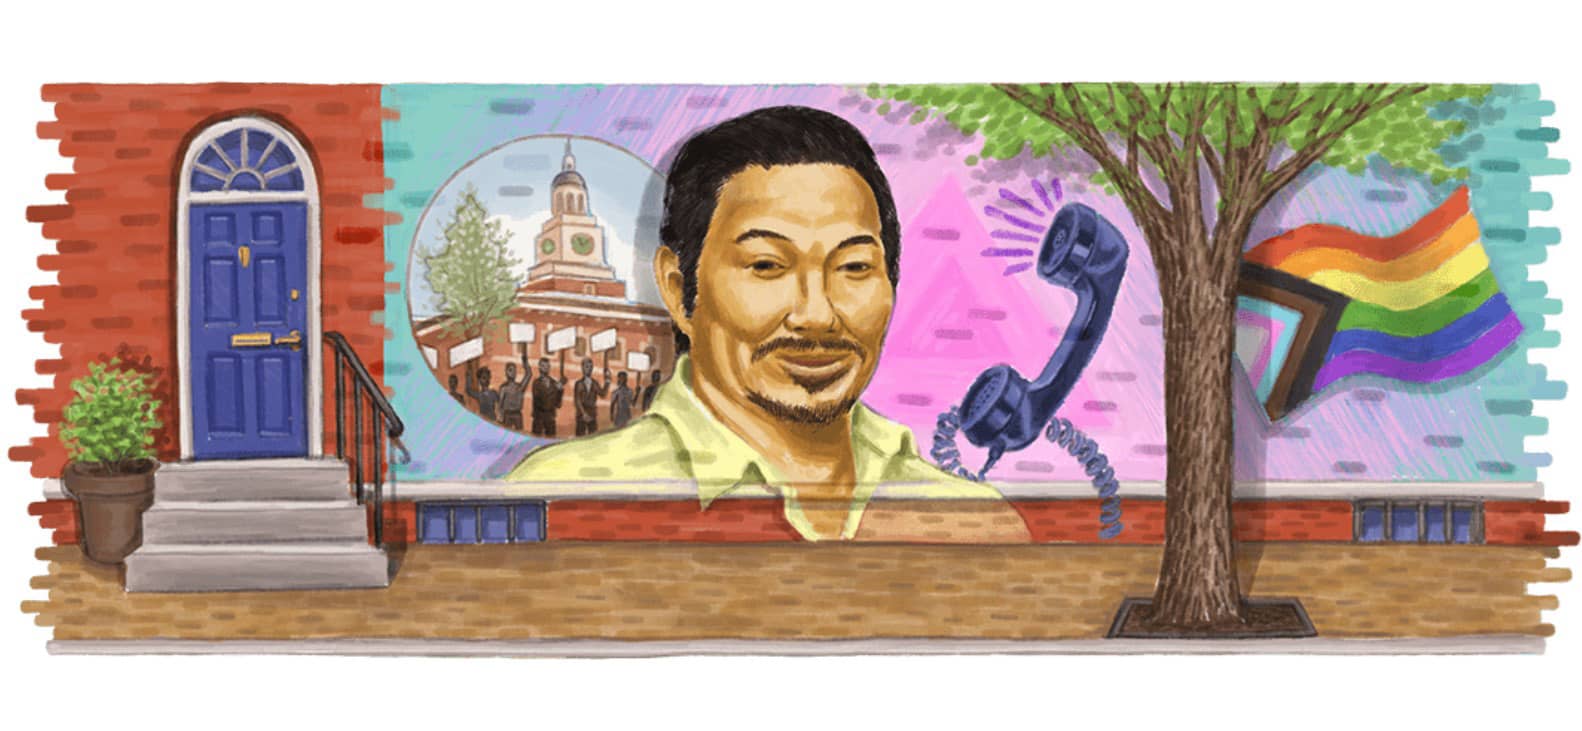 Kiyoshi Kuromiya à l'honneur sur Google avec un Doodle easter egg LGBT